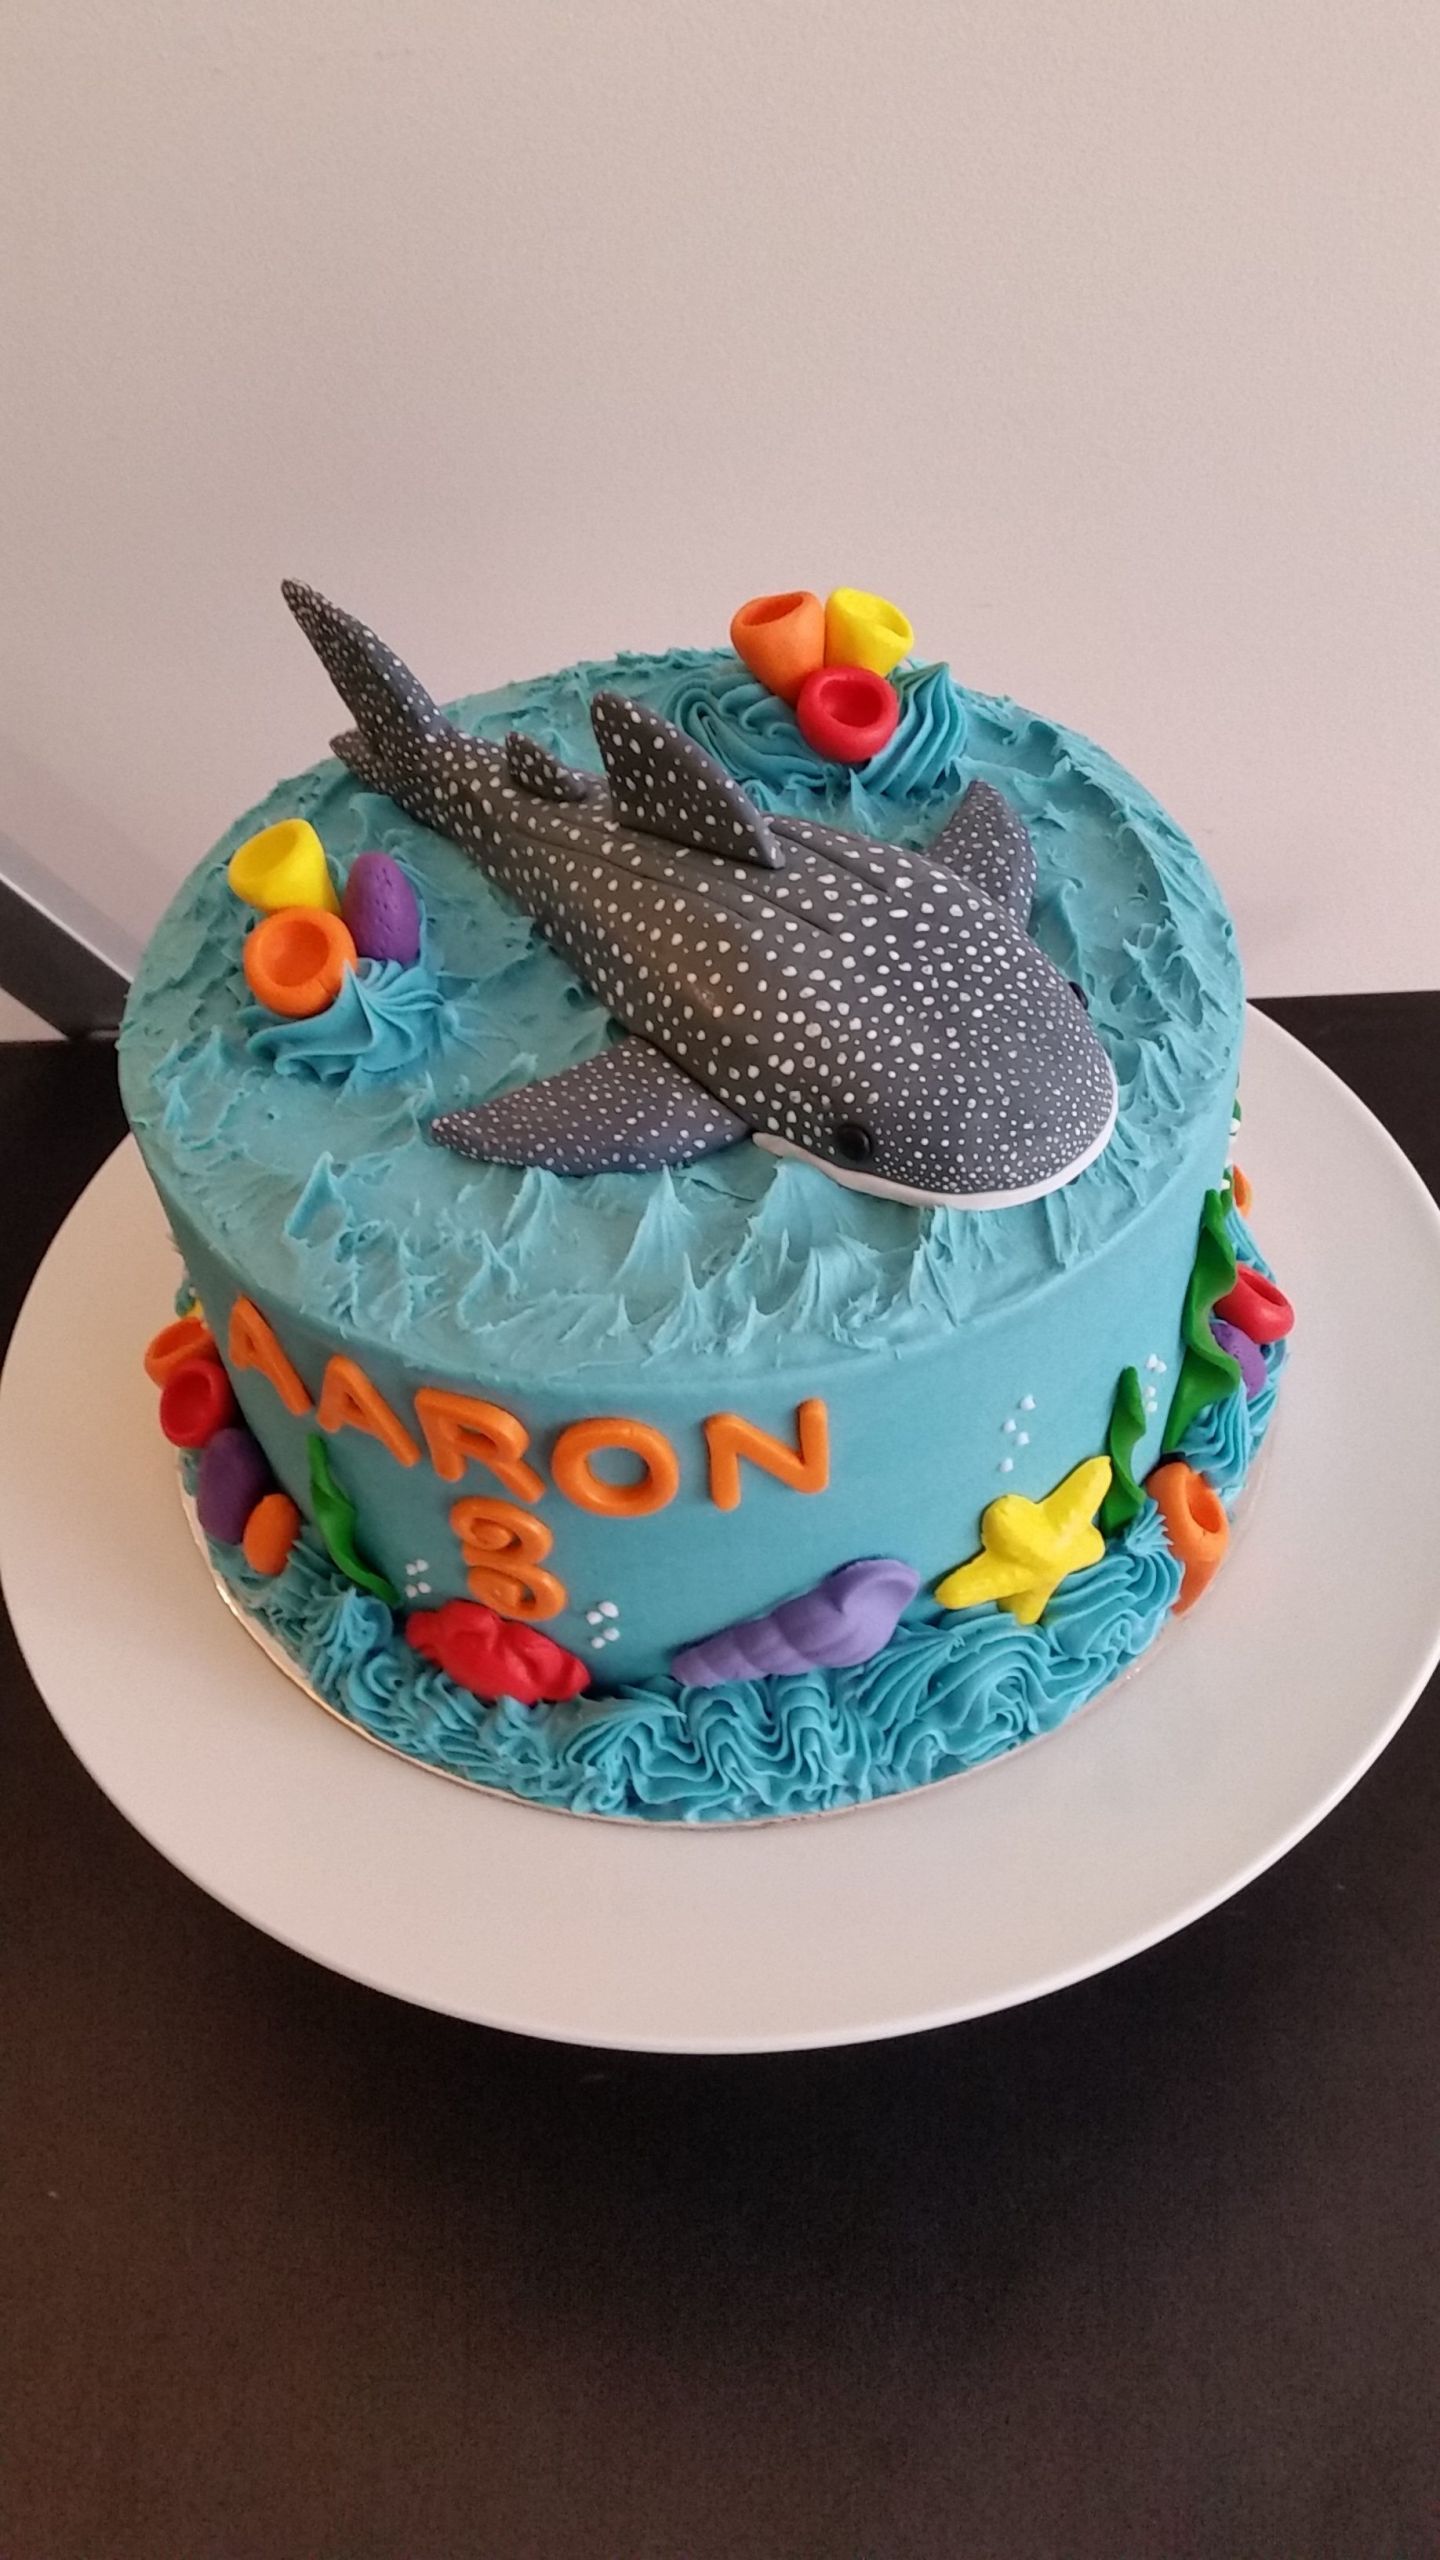 Shark Birthday Cakes
 The Whale Shark Cake – Anita of Cake